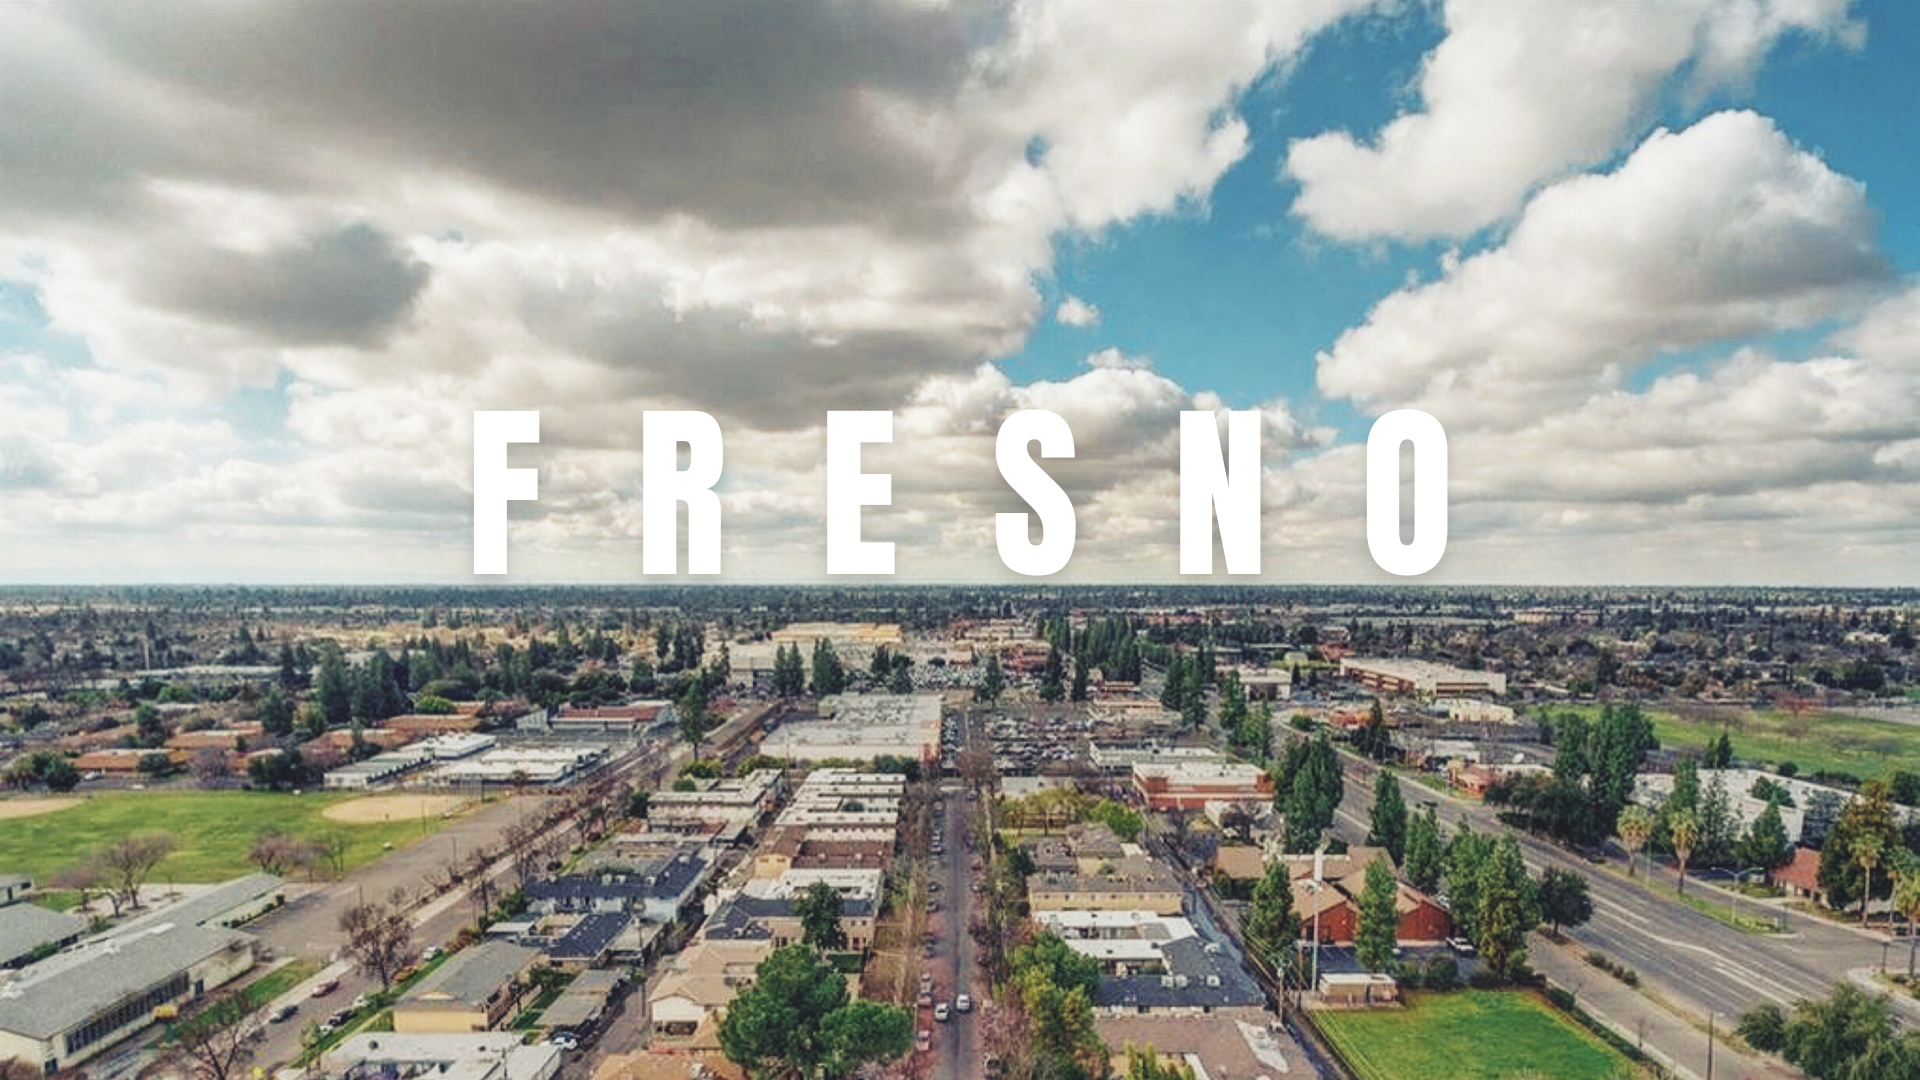 The City of Fresno